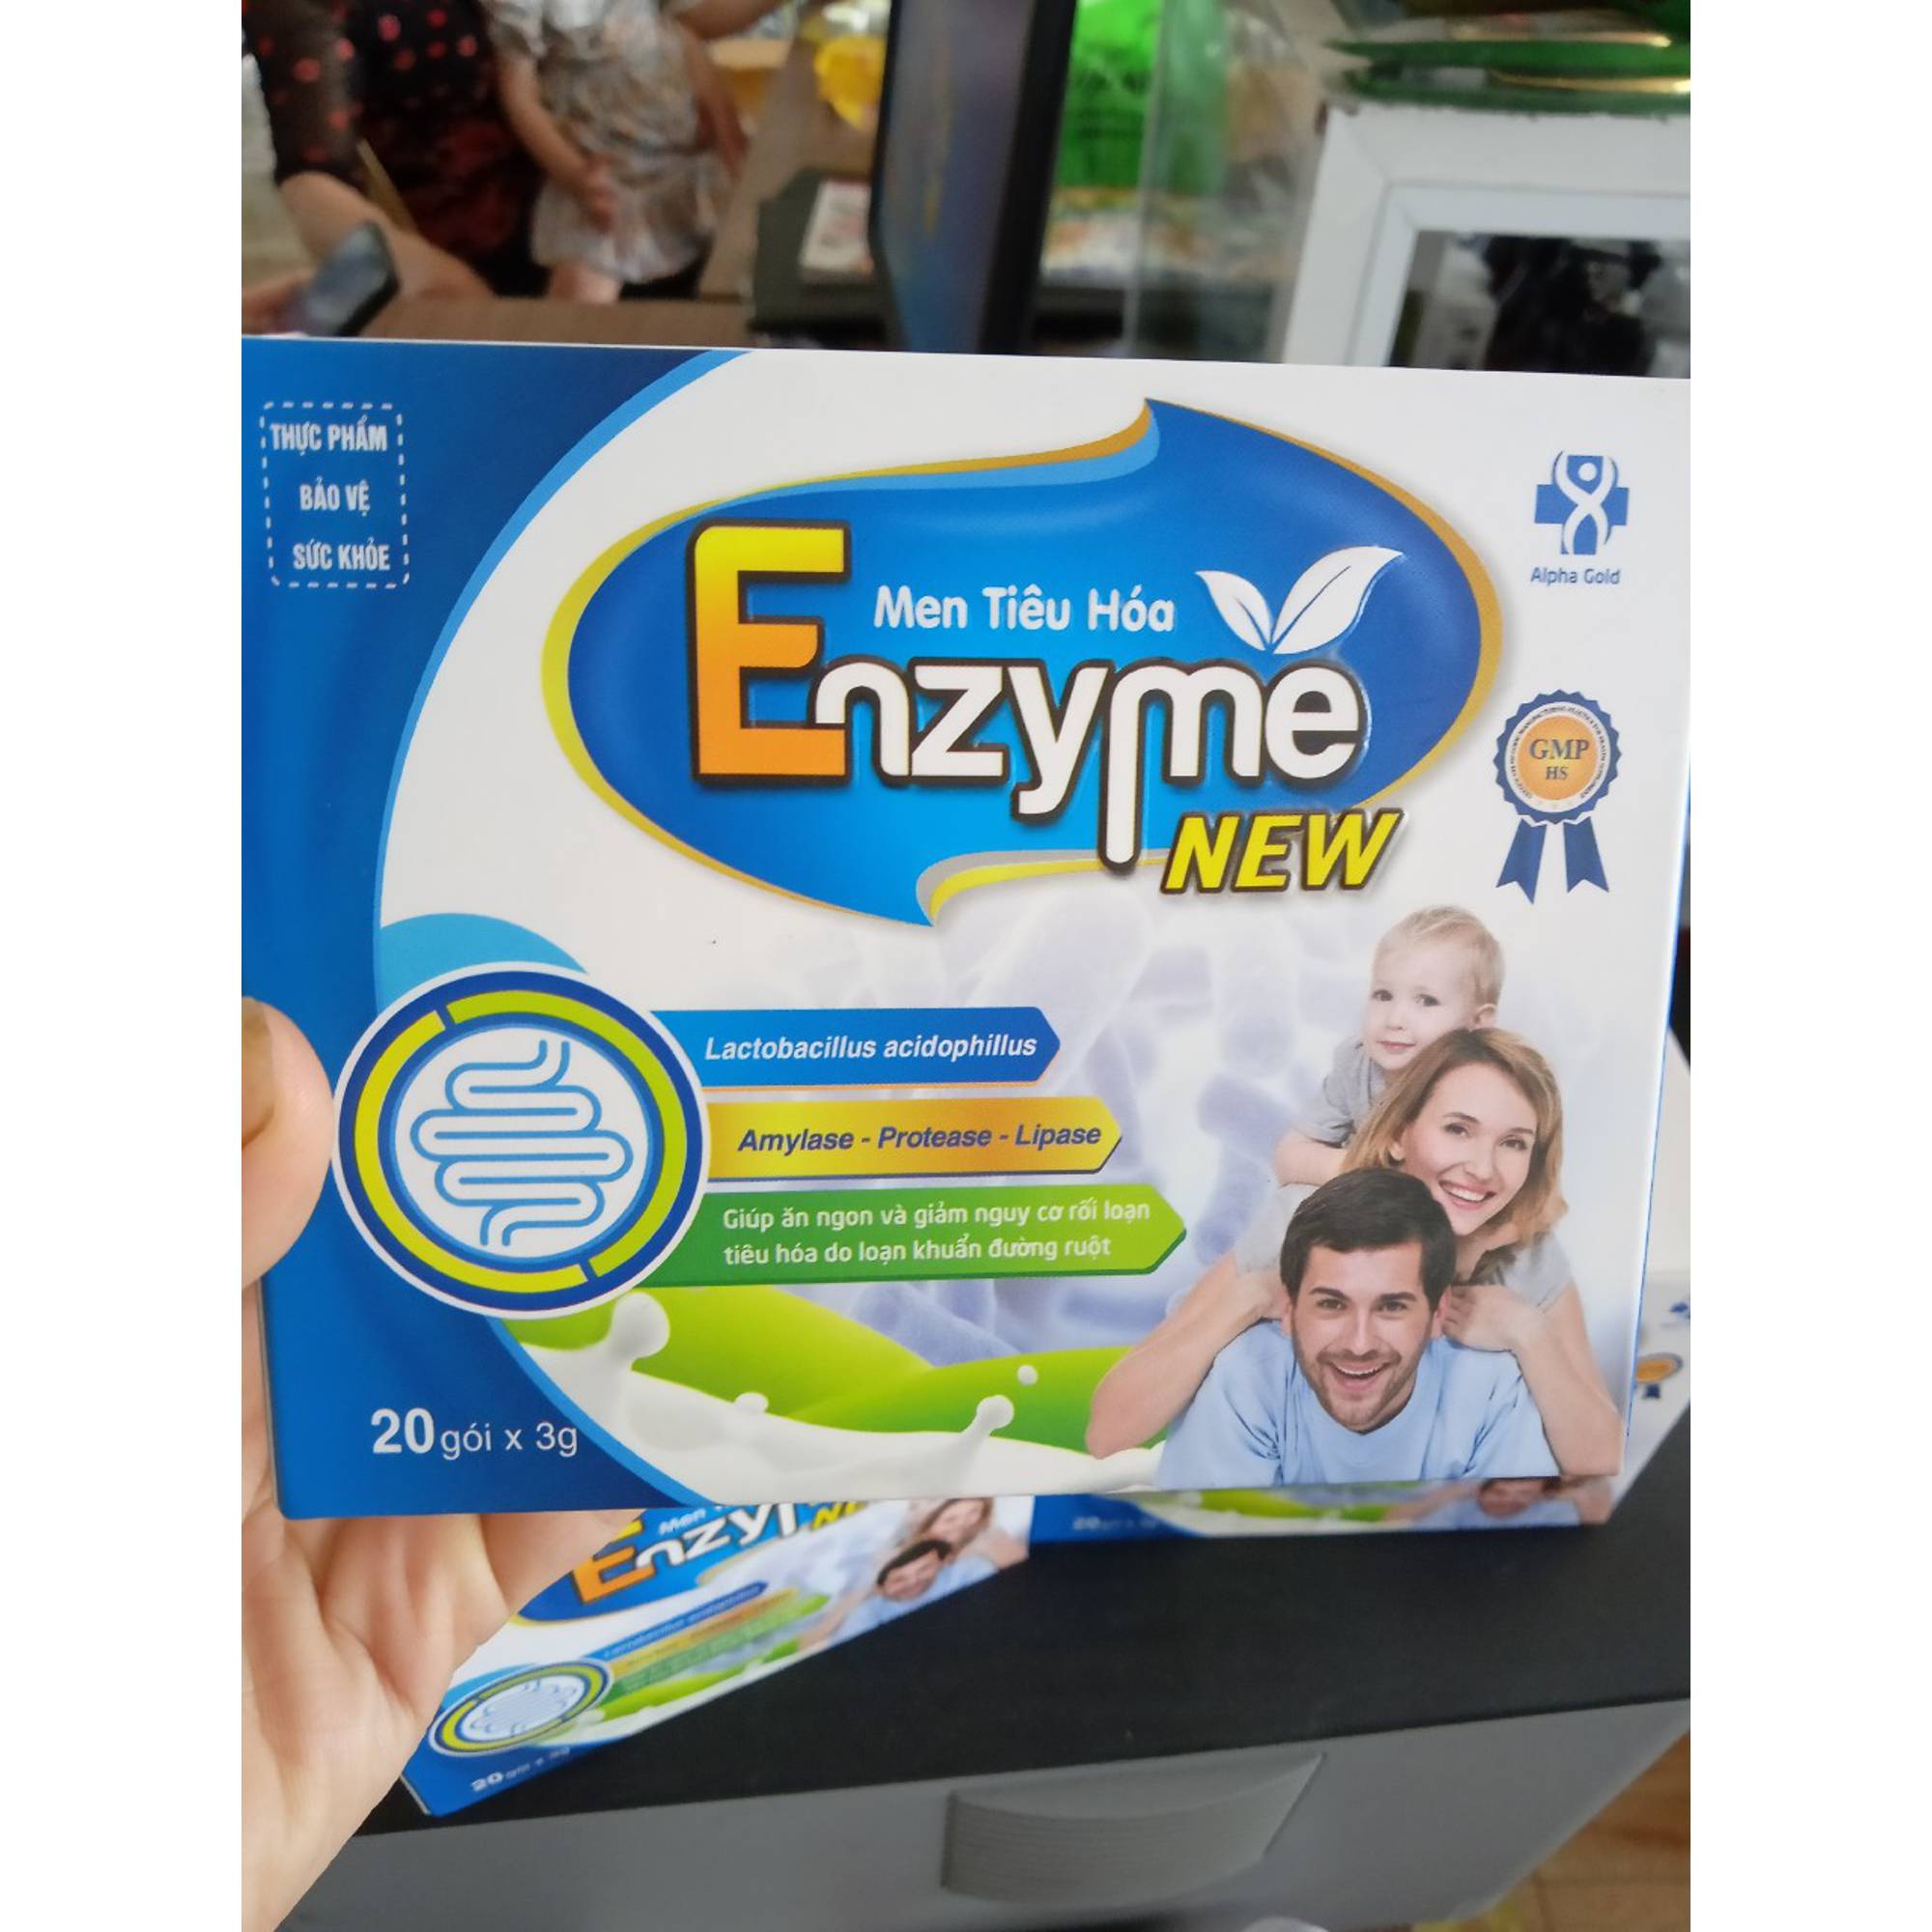 men tiêu hóa enzyme new